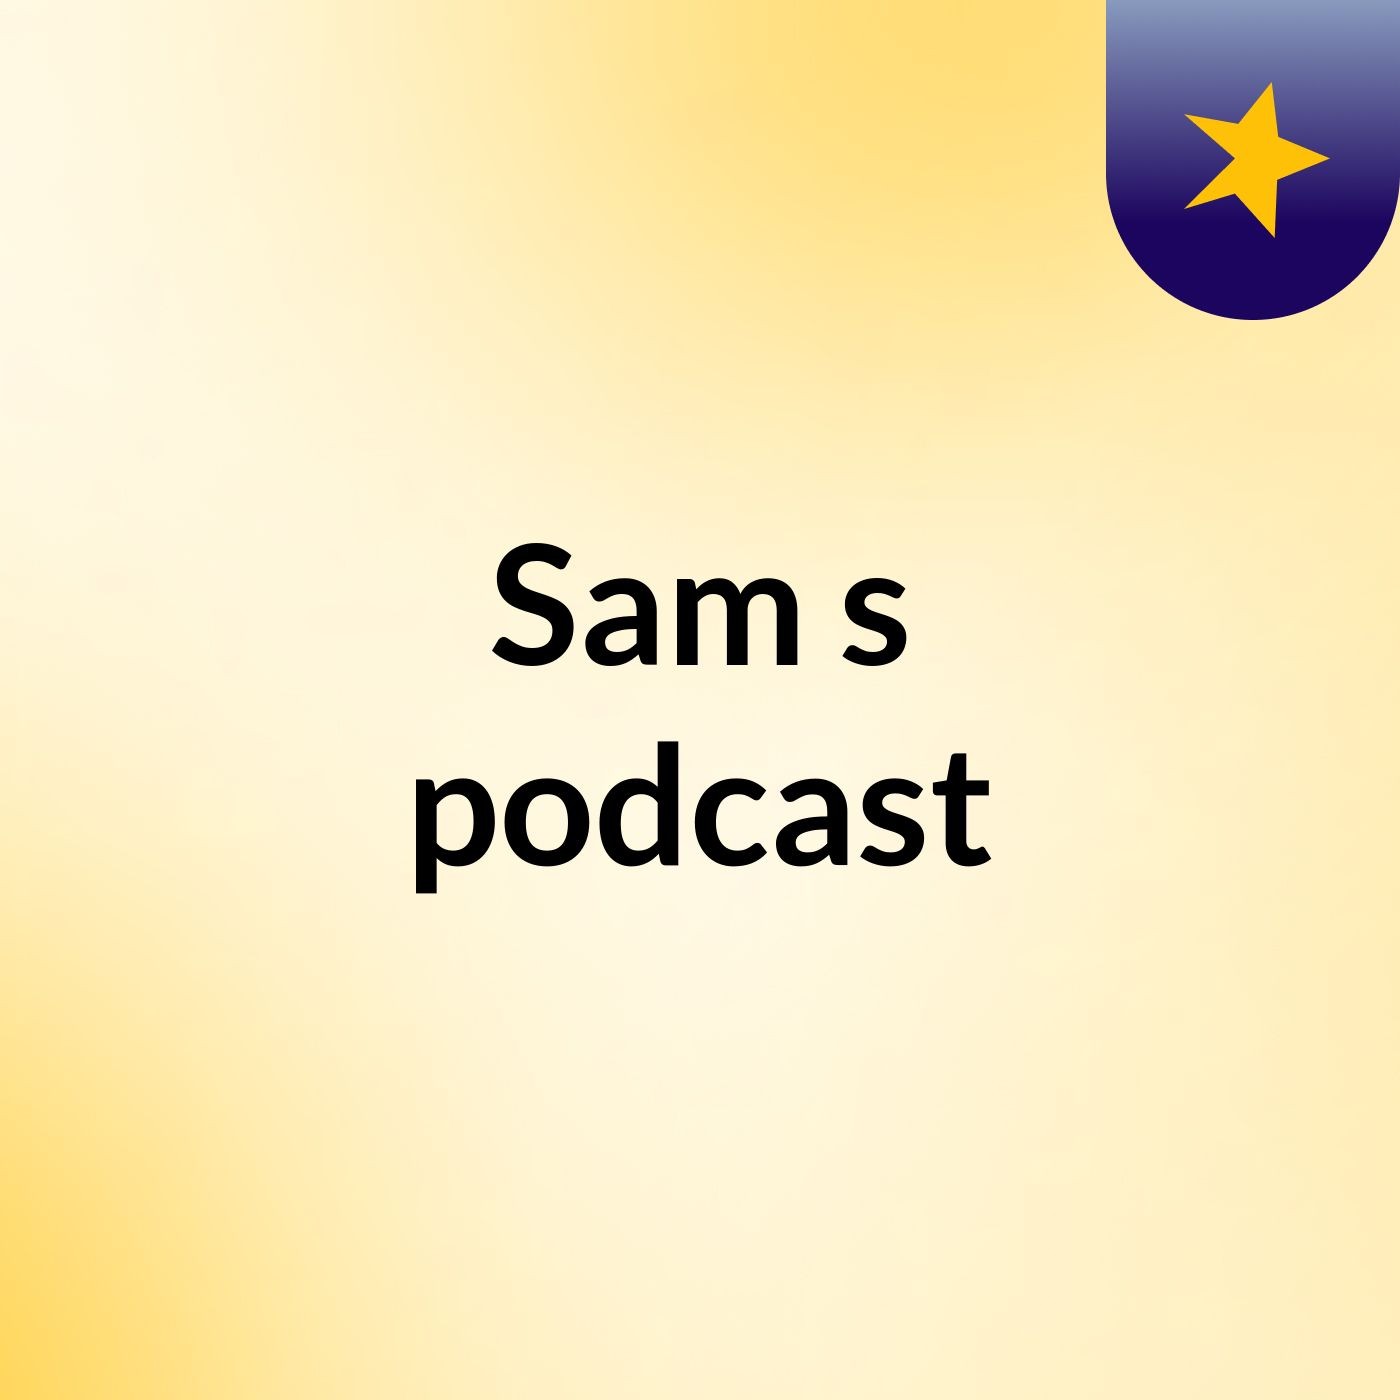 Sam's podcast